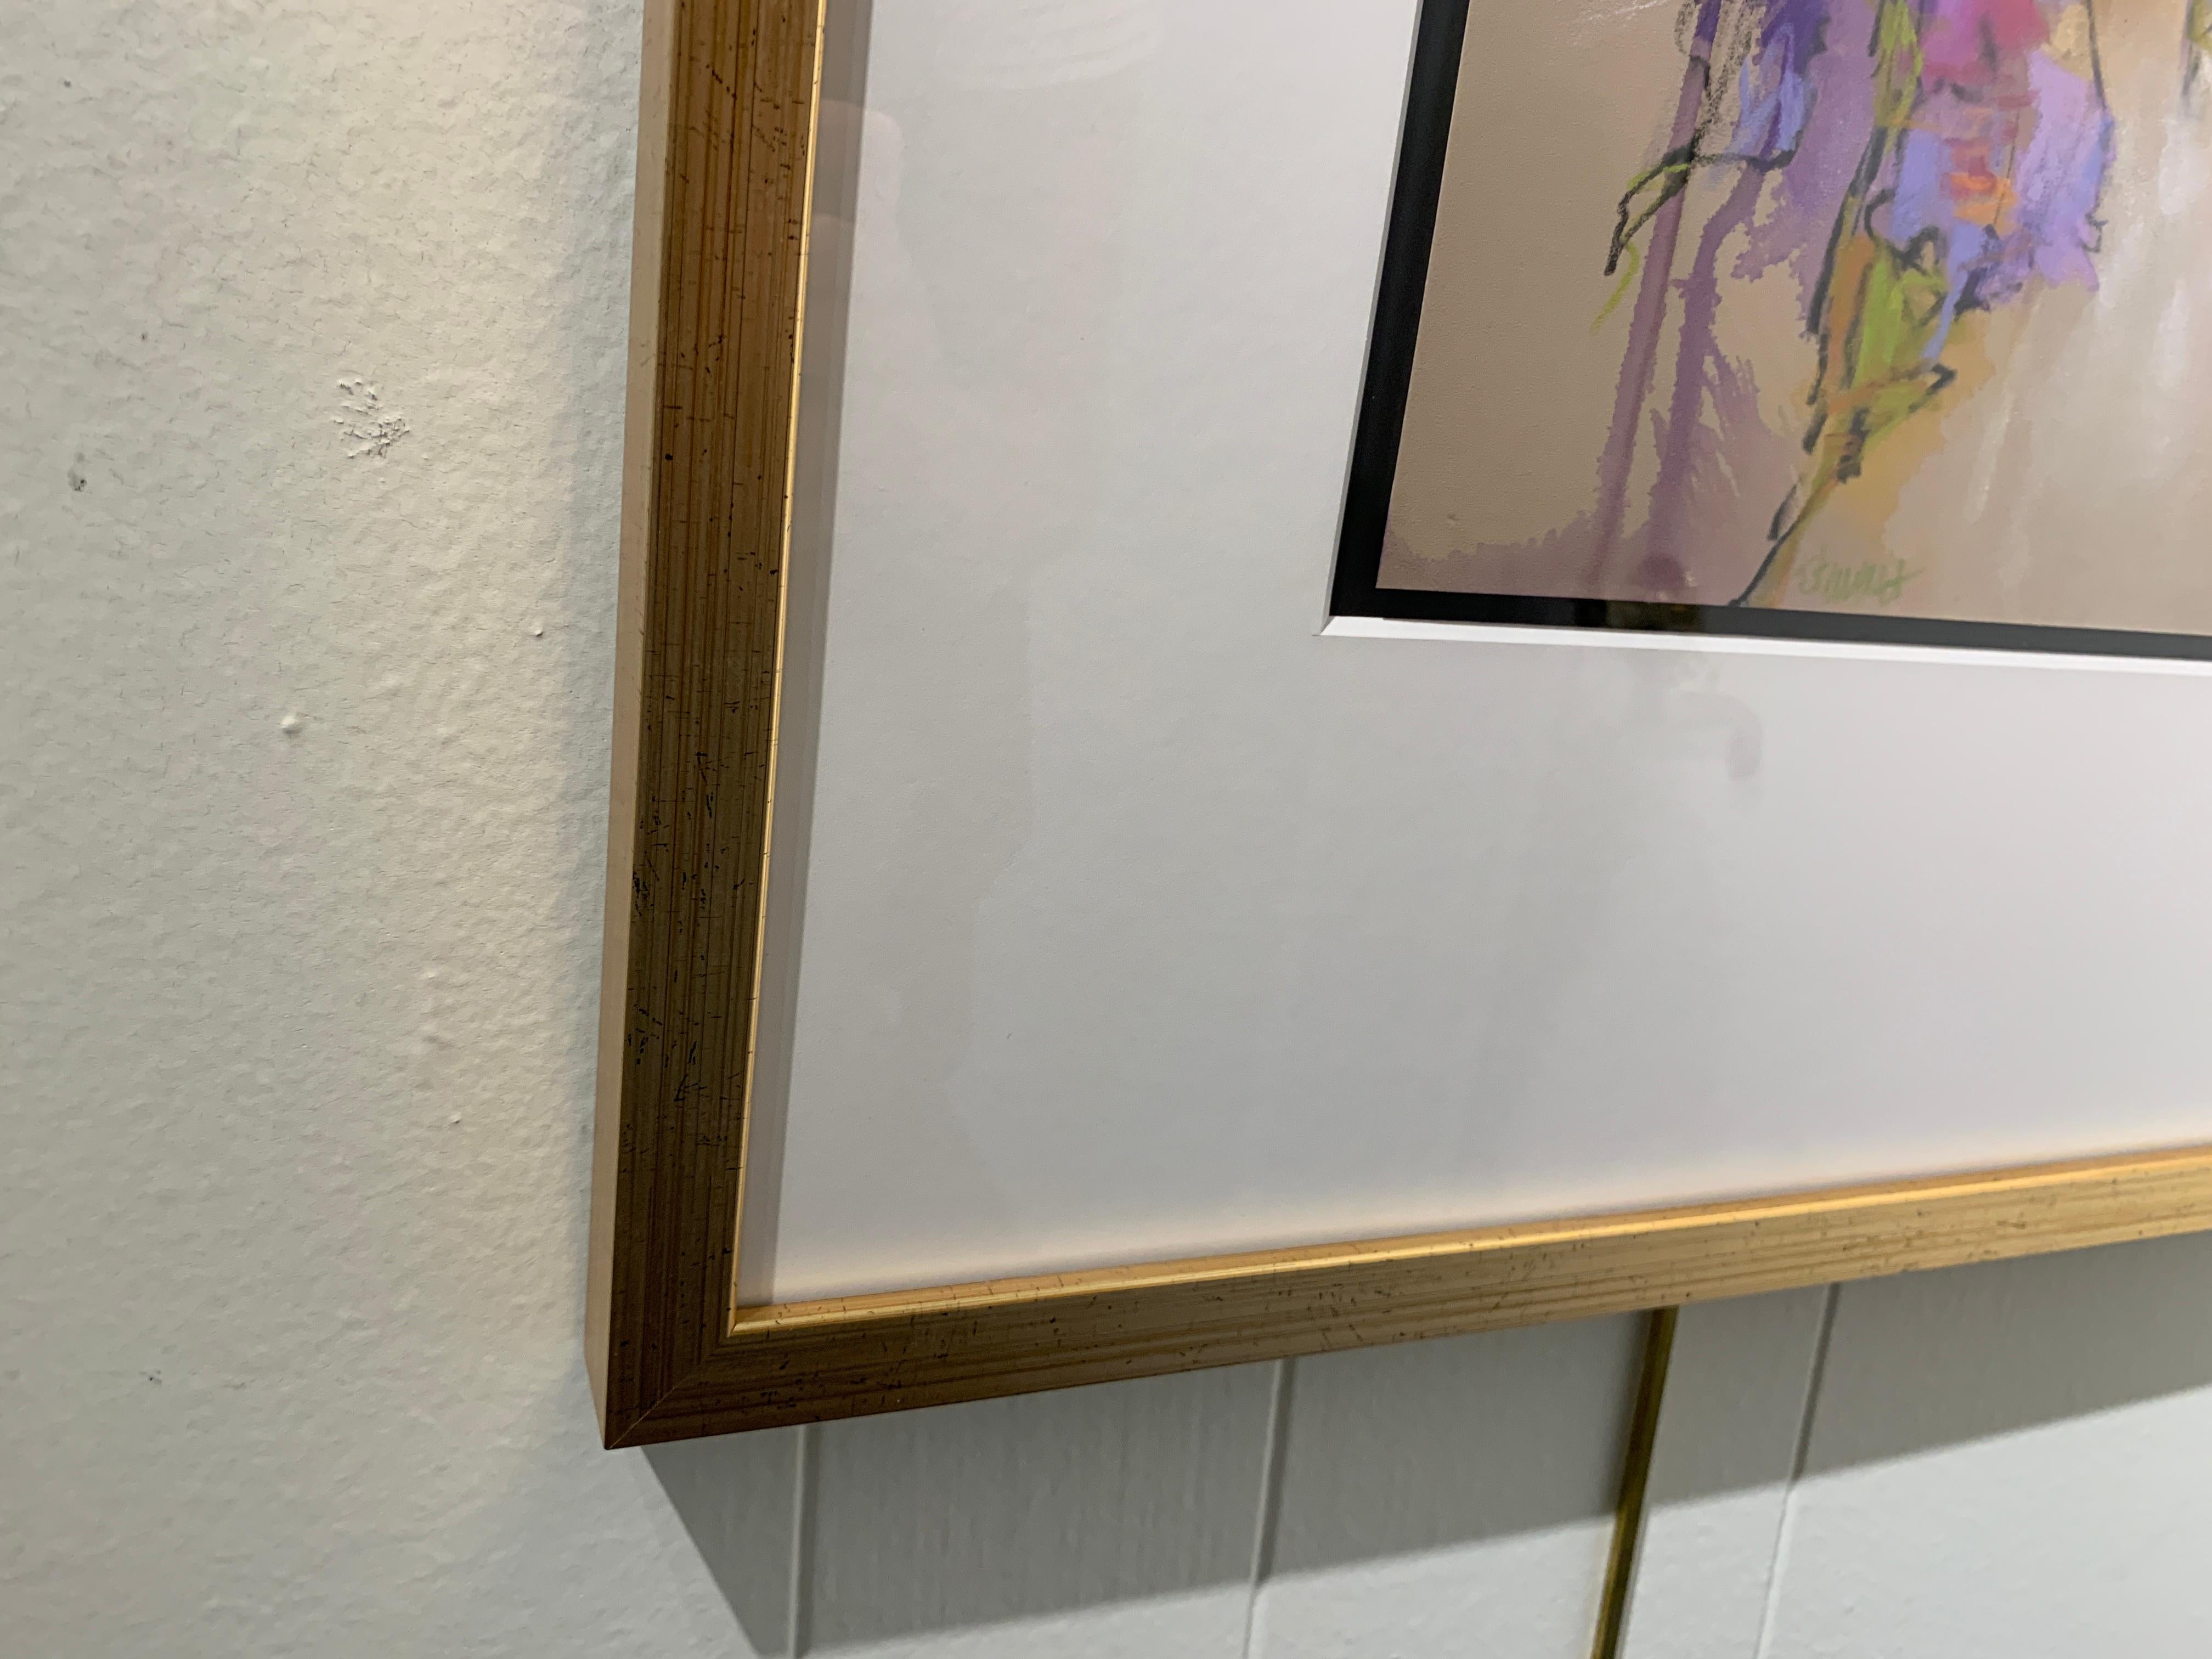 Monet's Irises II by Debora Stewart, Framed Pastel and Mixed Media Work on Paper 6